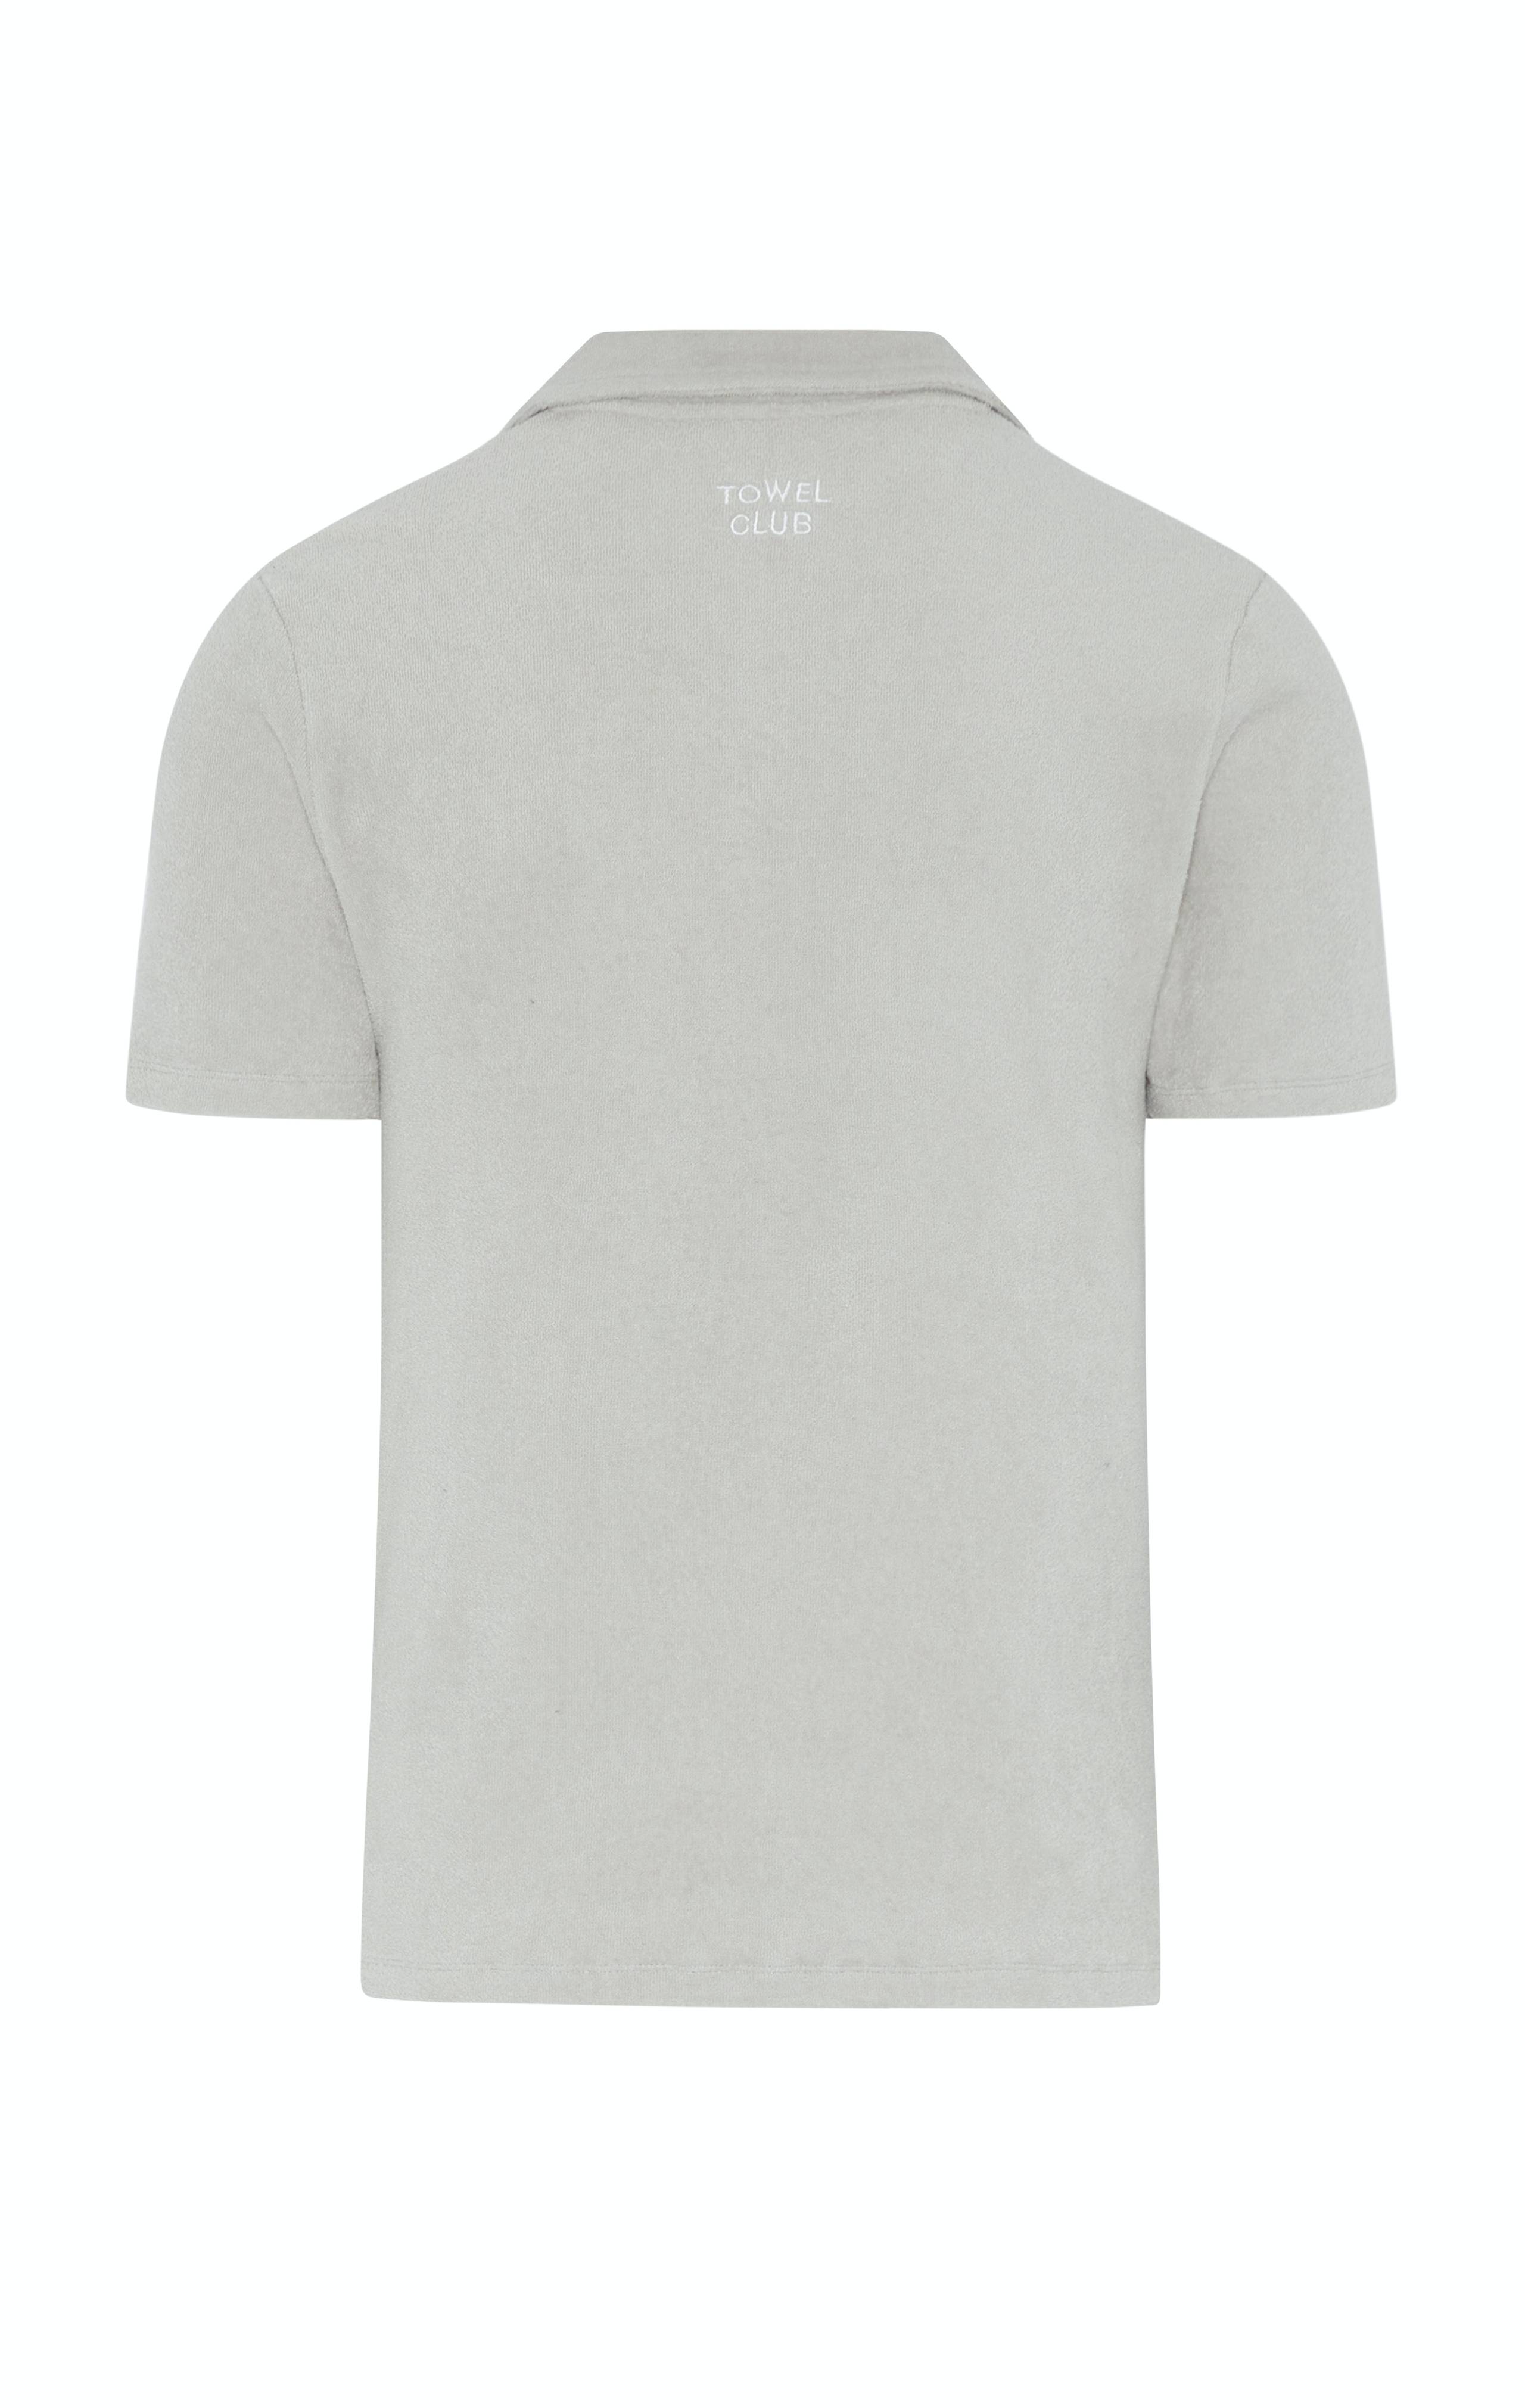 Onepiece Towel Club Piquet Shirt Light Grey - 2